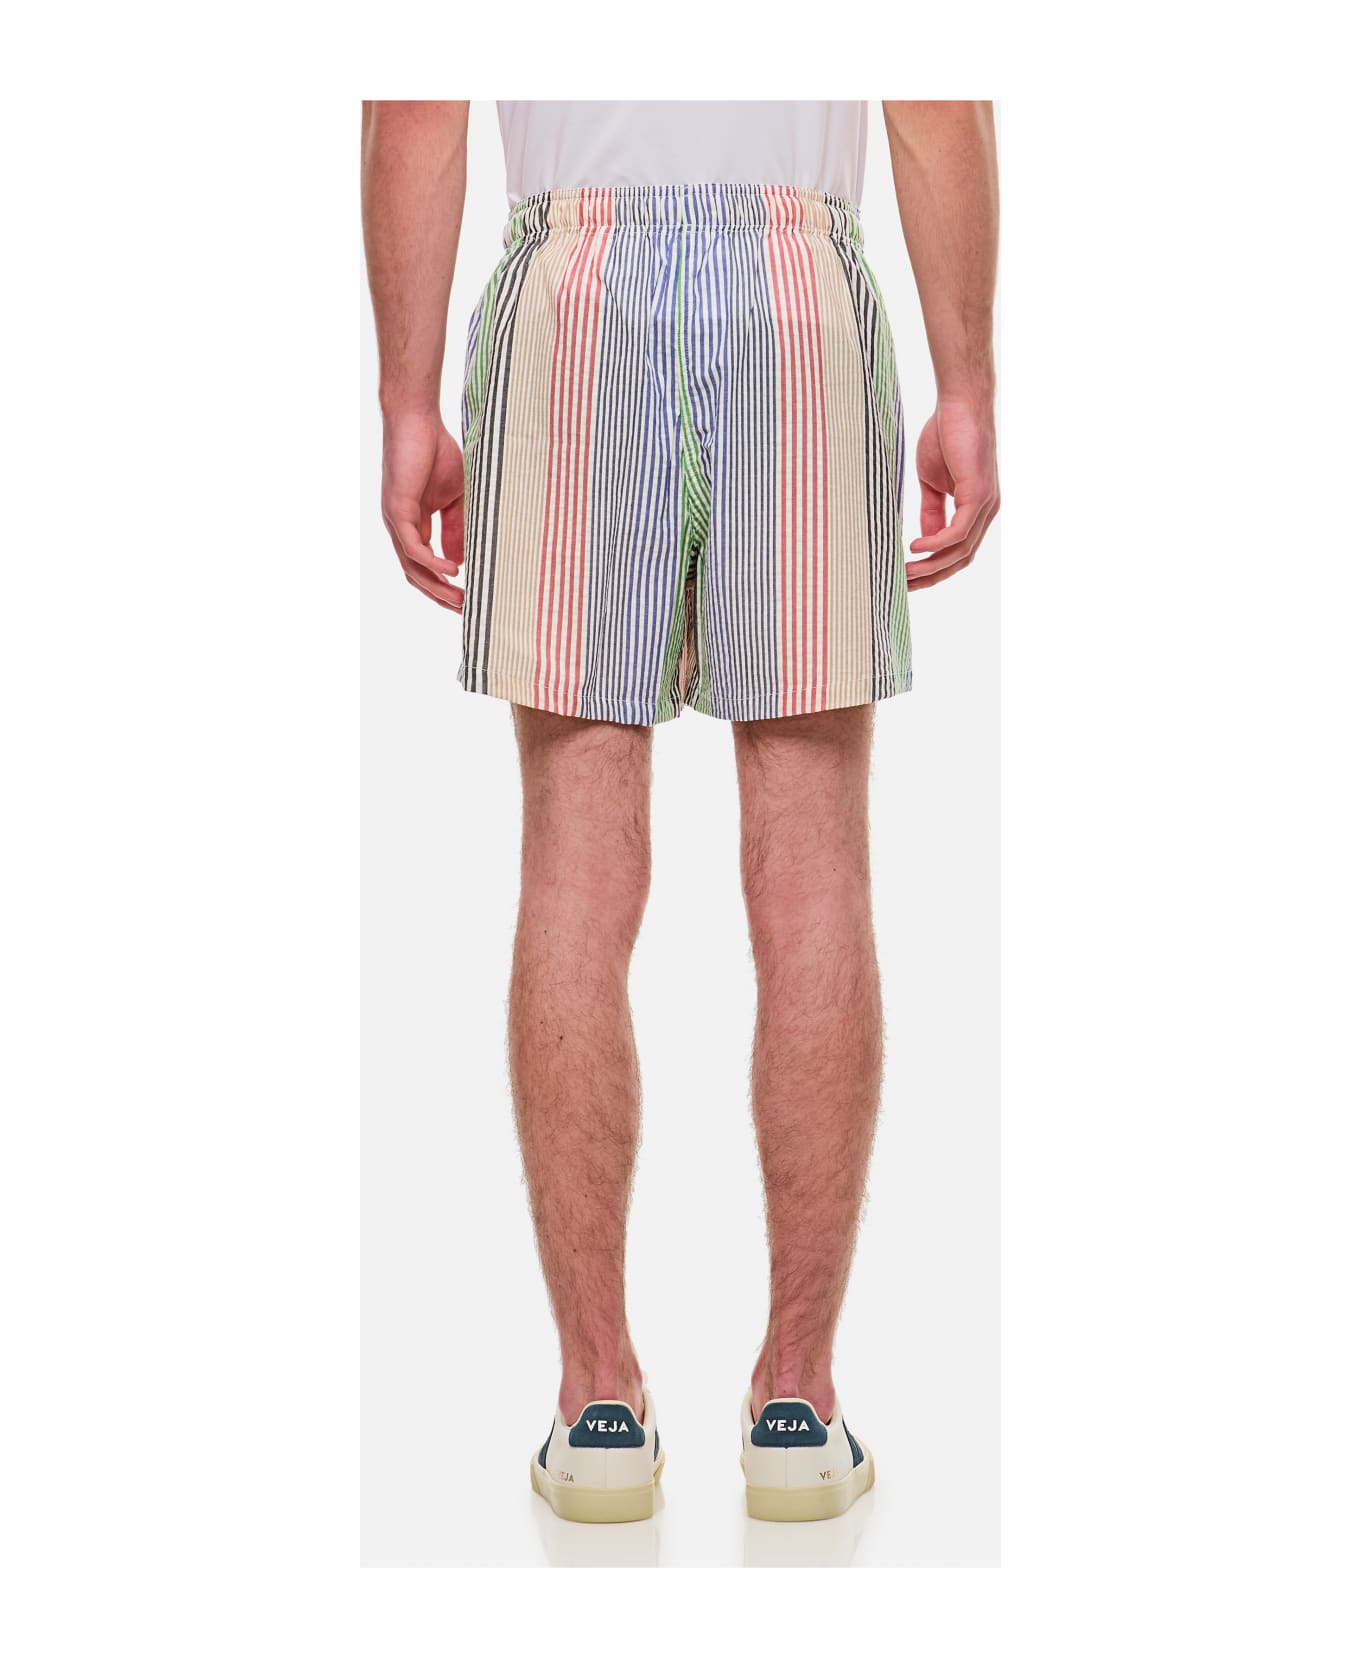 Howlin Cotton Seersucker Shorts - MultiColour